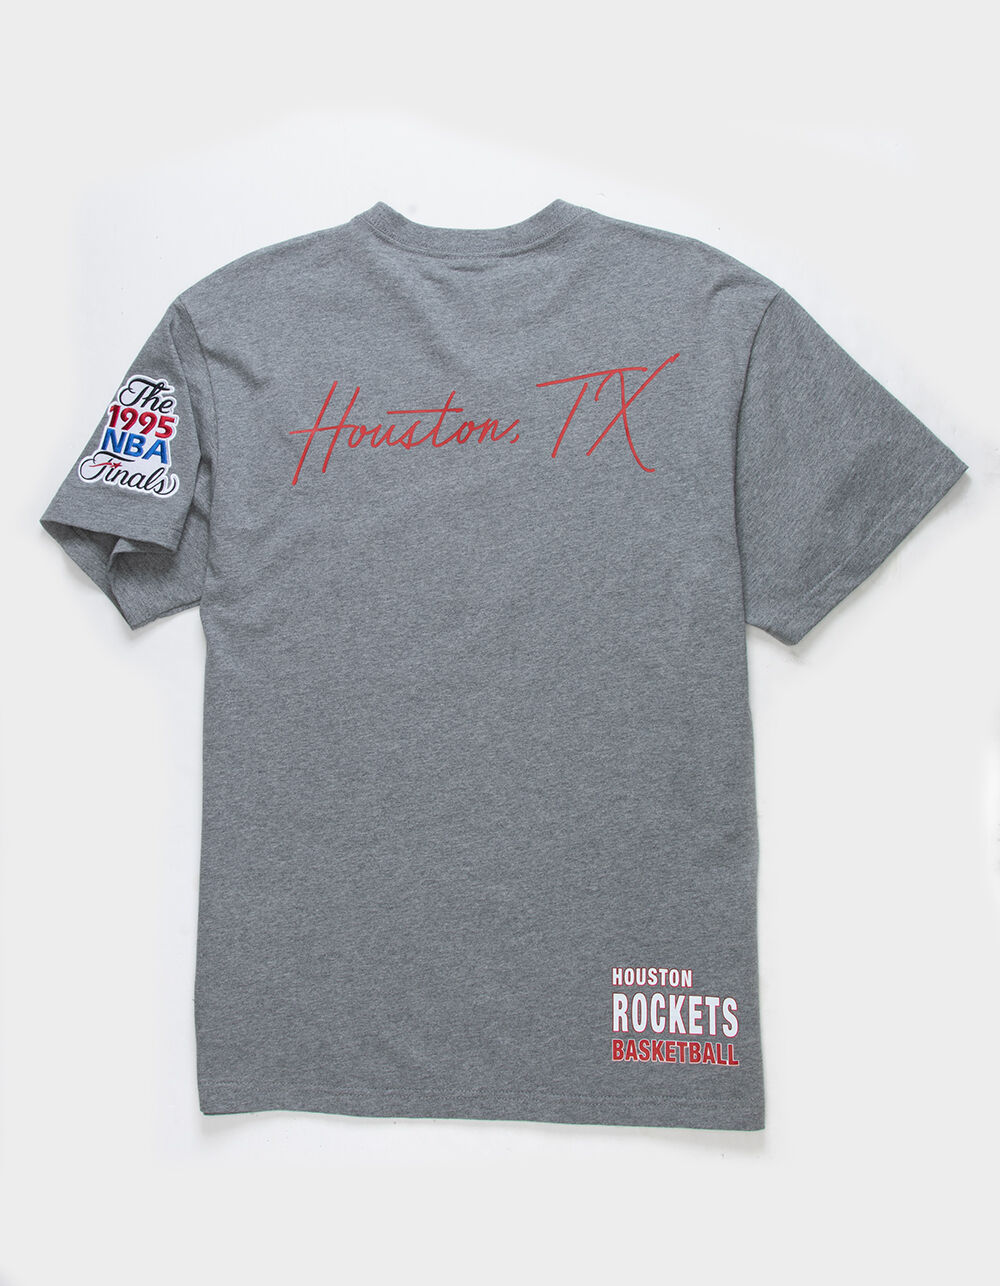 Unisex Houston Rockets 5 Pack Jibbitz 902594 | Rack Room